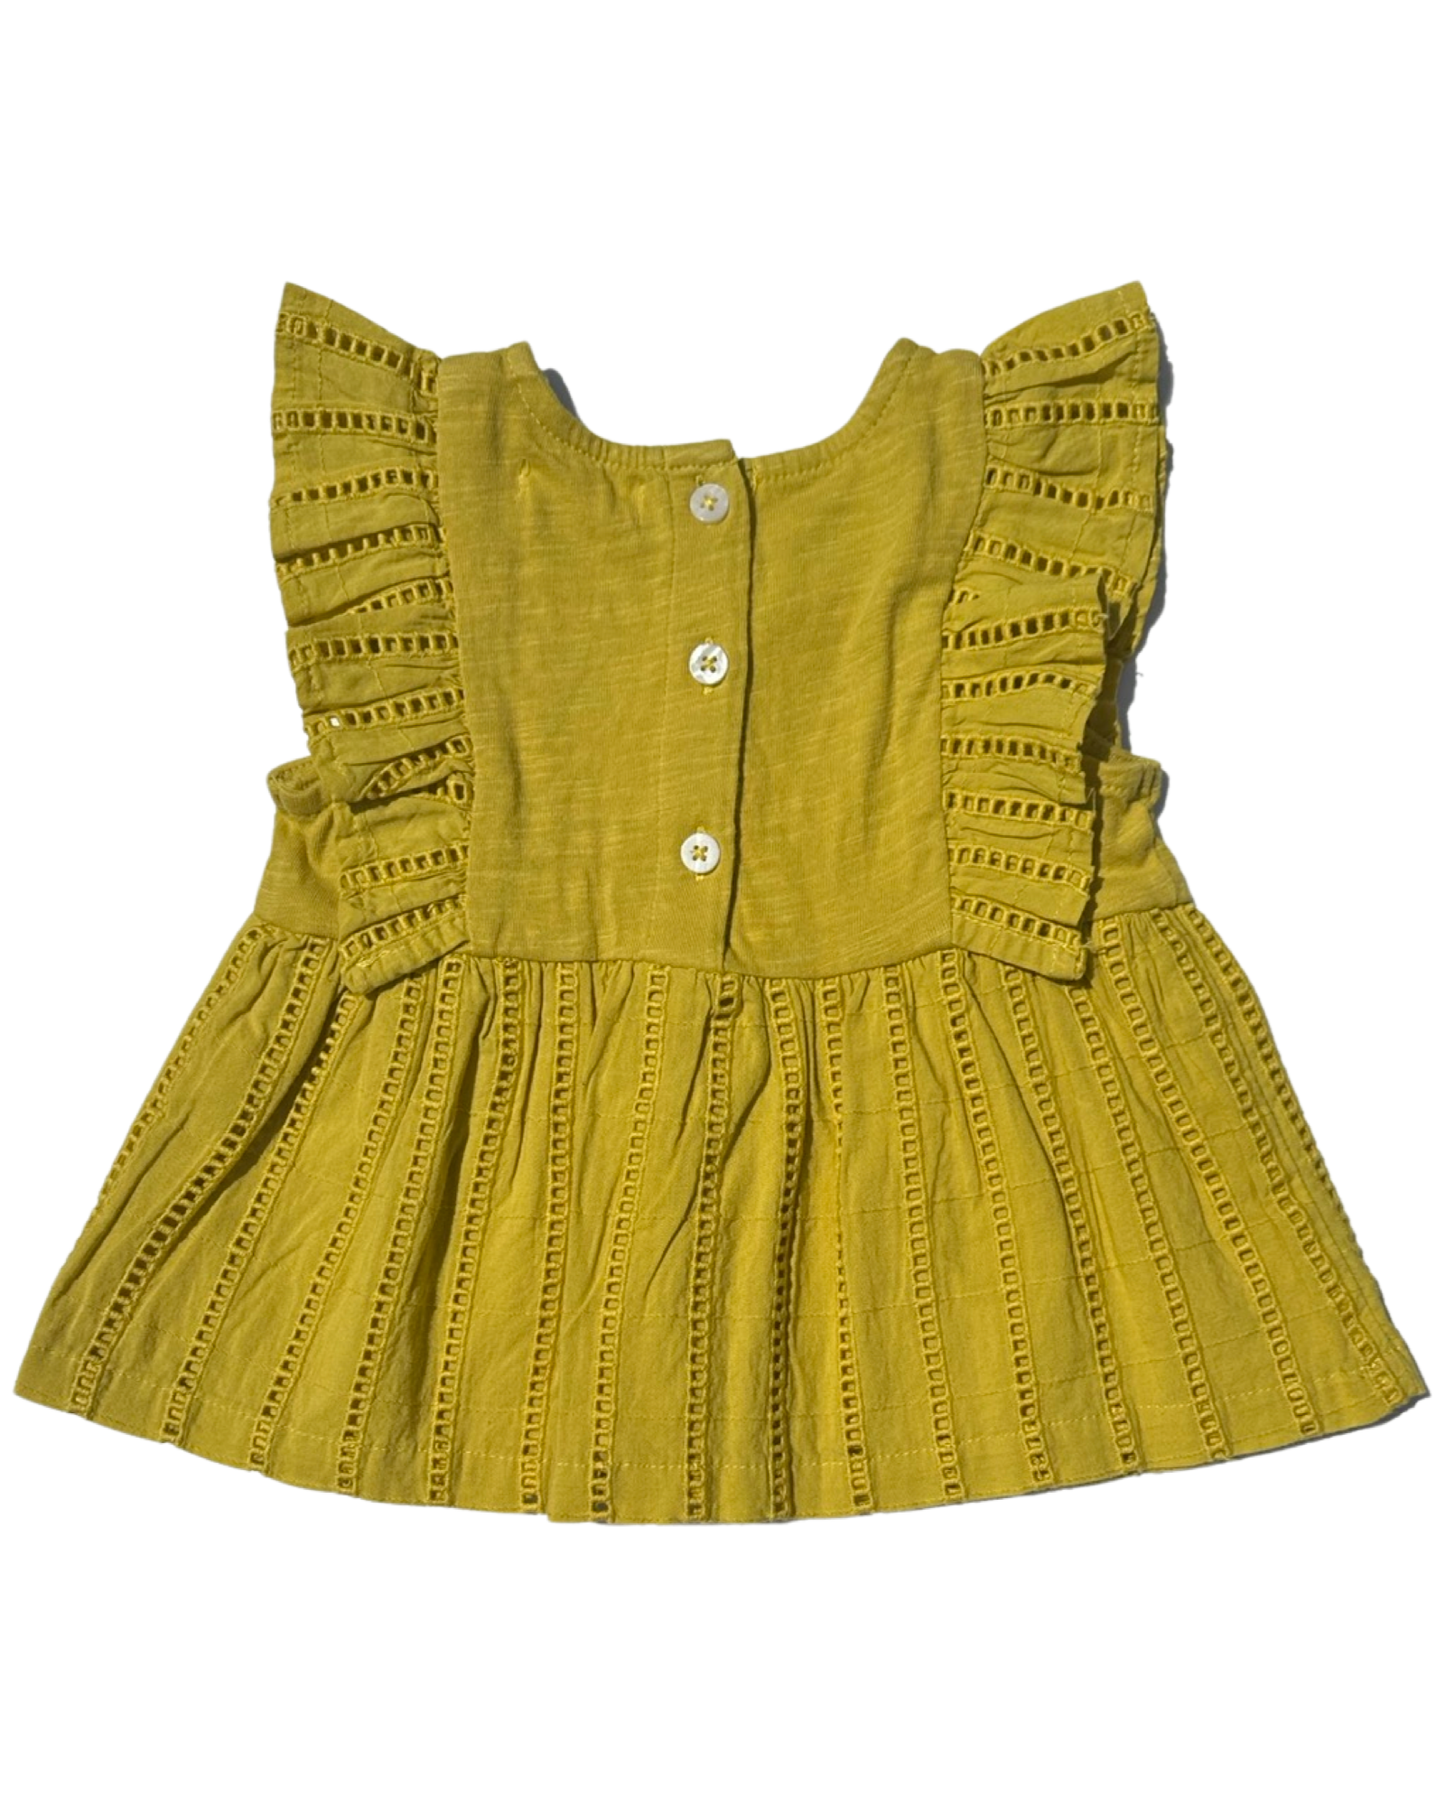 Next mustard yellow cotton tshirt (size 3-6mths)